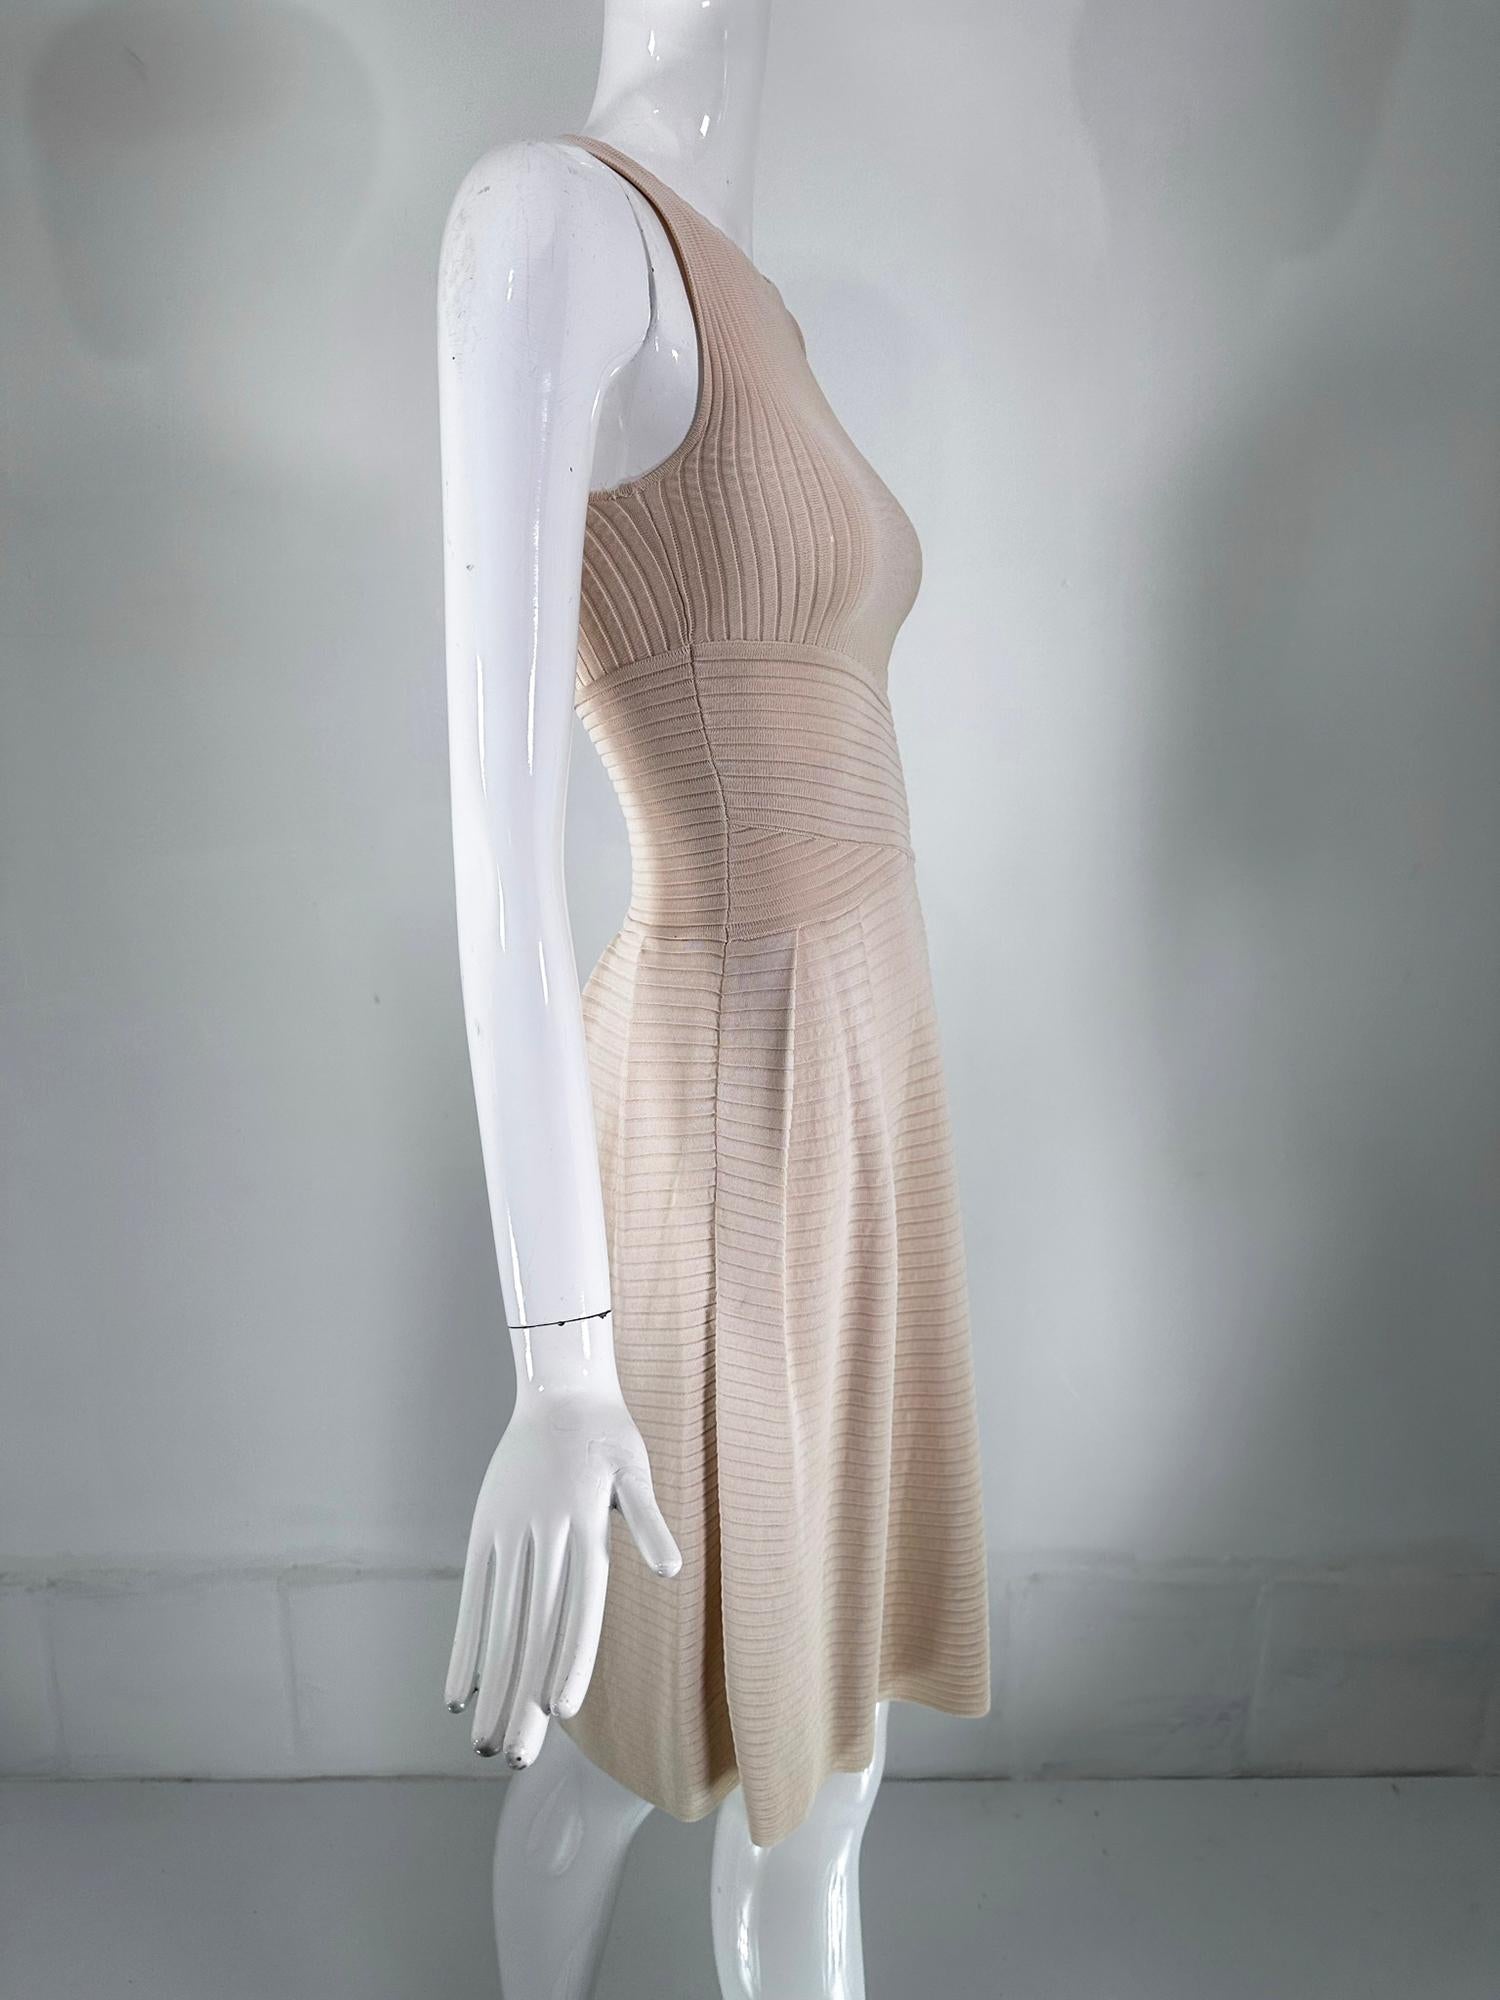 Women's Christian Dior Paris Ribbed Knit Beige Tank Dress 2010 For Sale